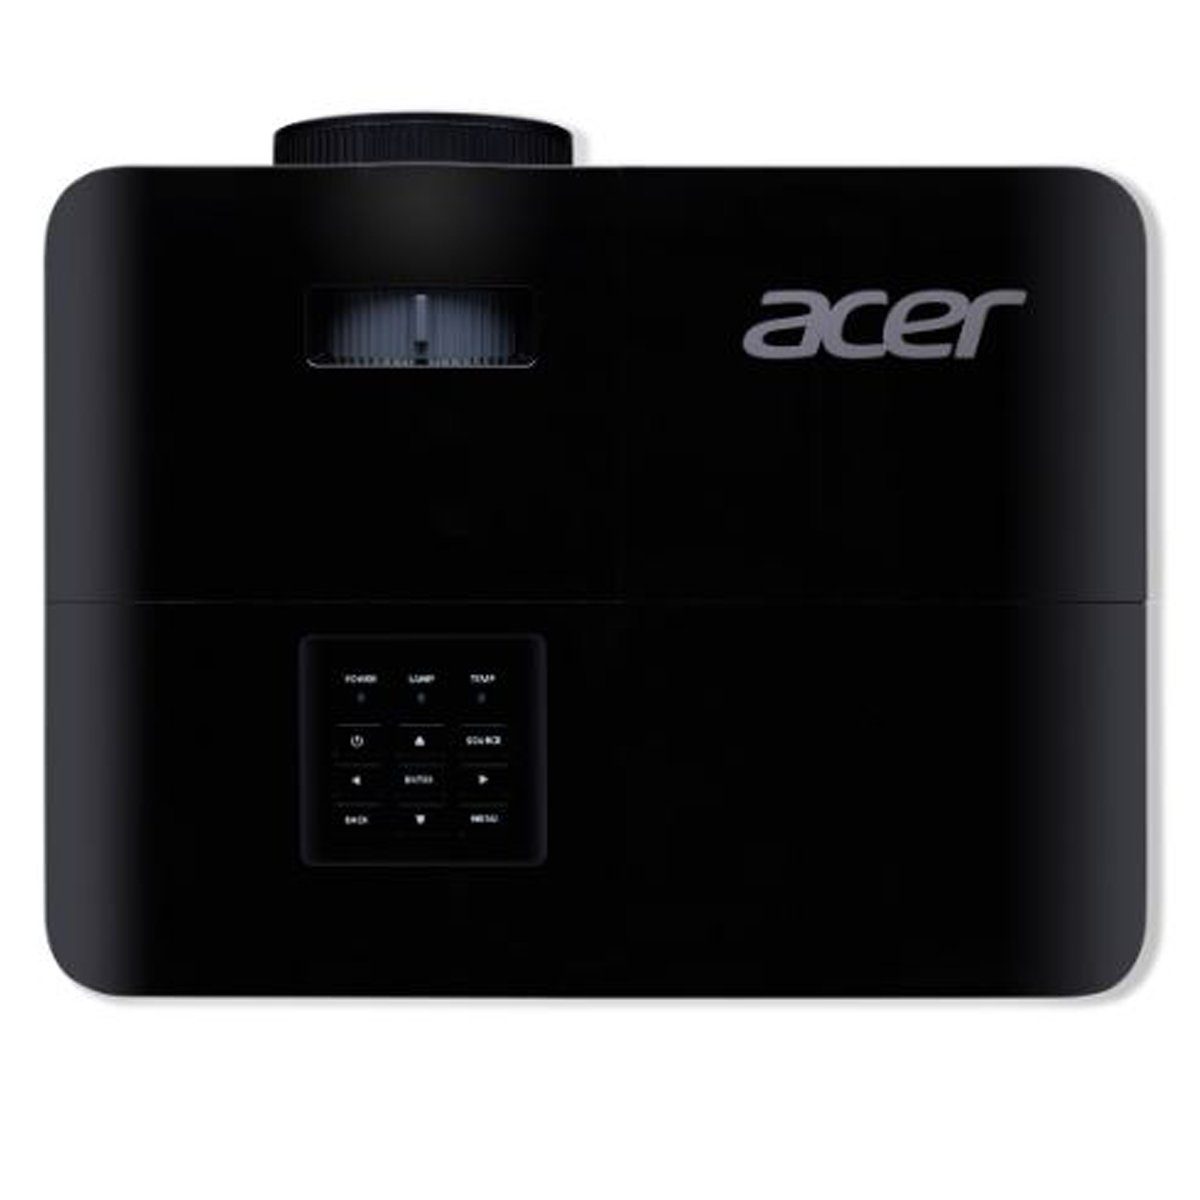 lm, Acer XL1128H 20000:1, 800 px) Beamer (4500 x 600